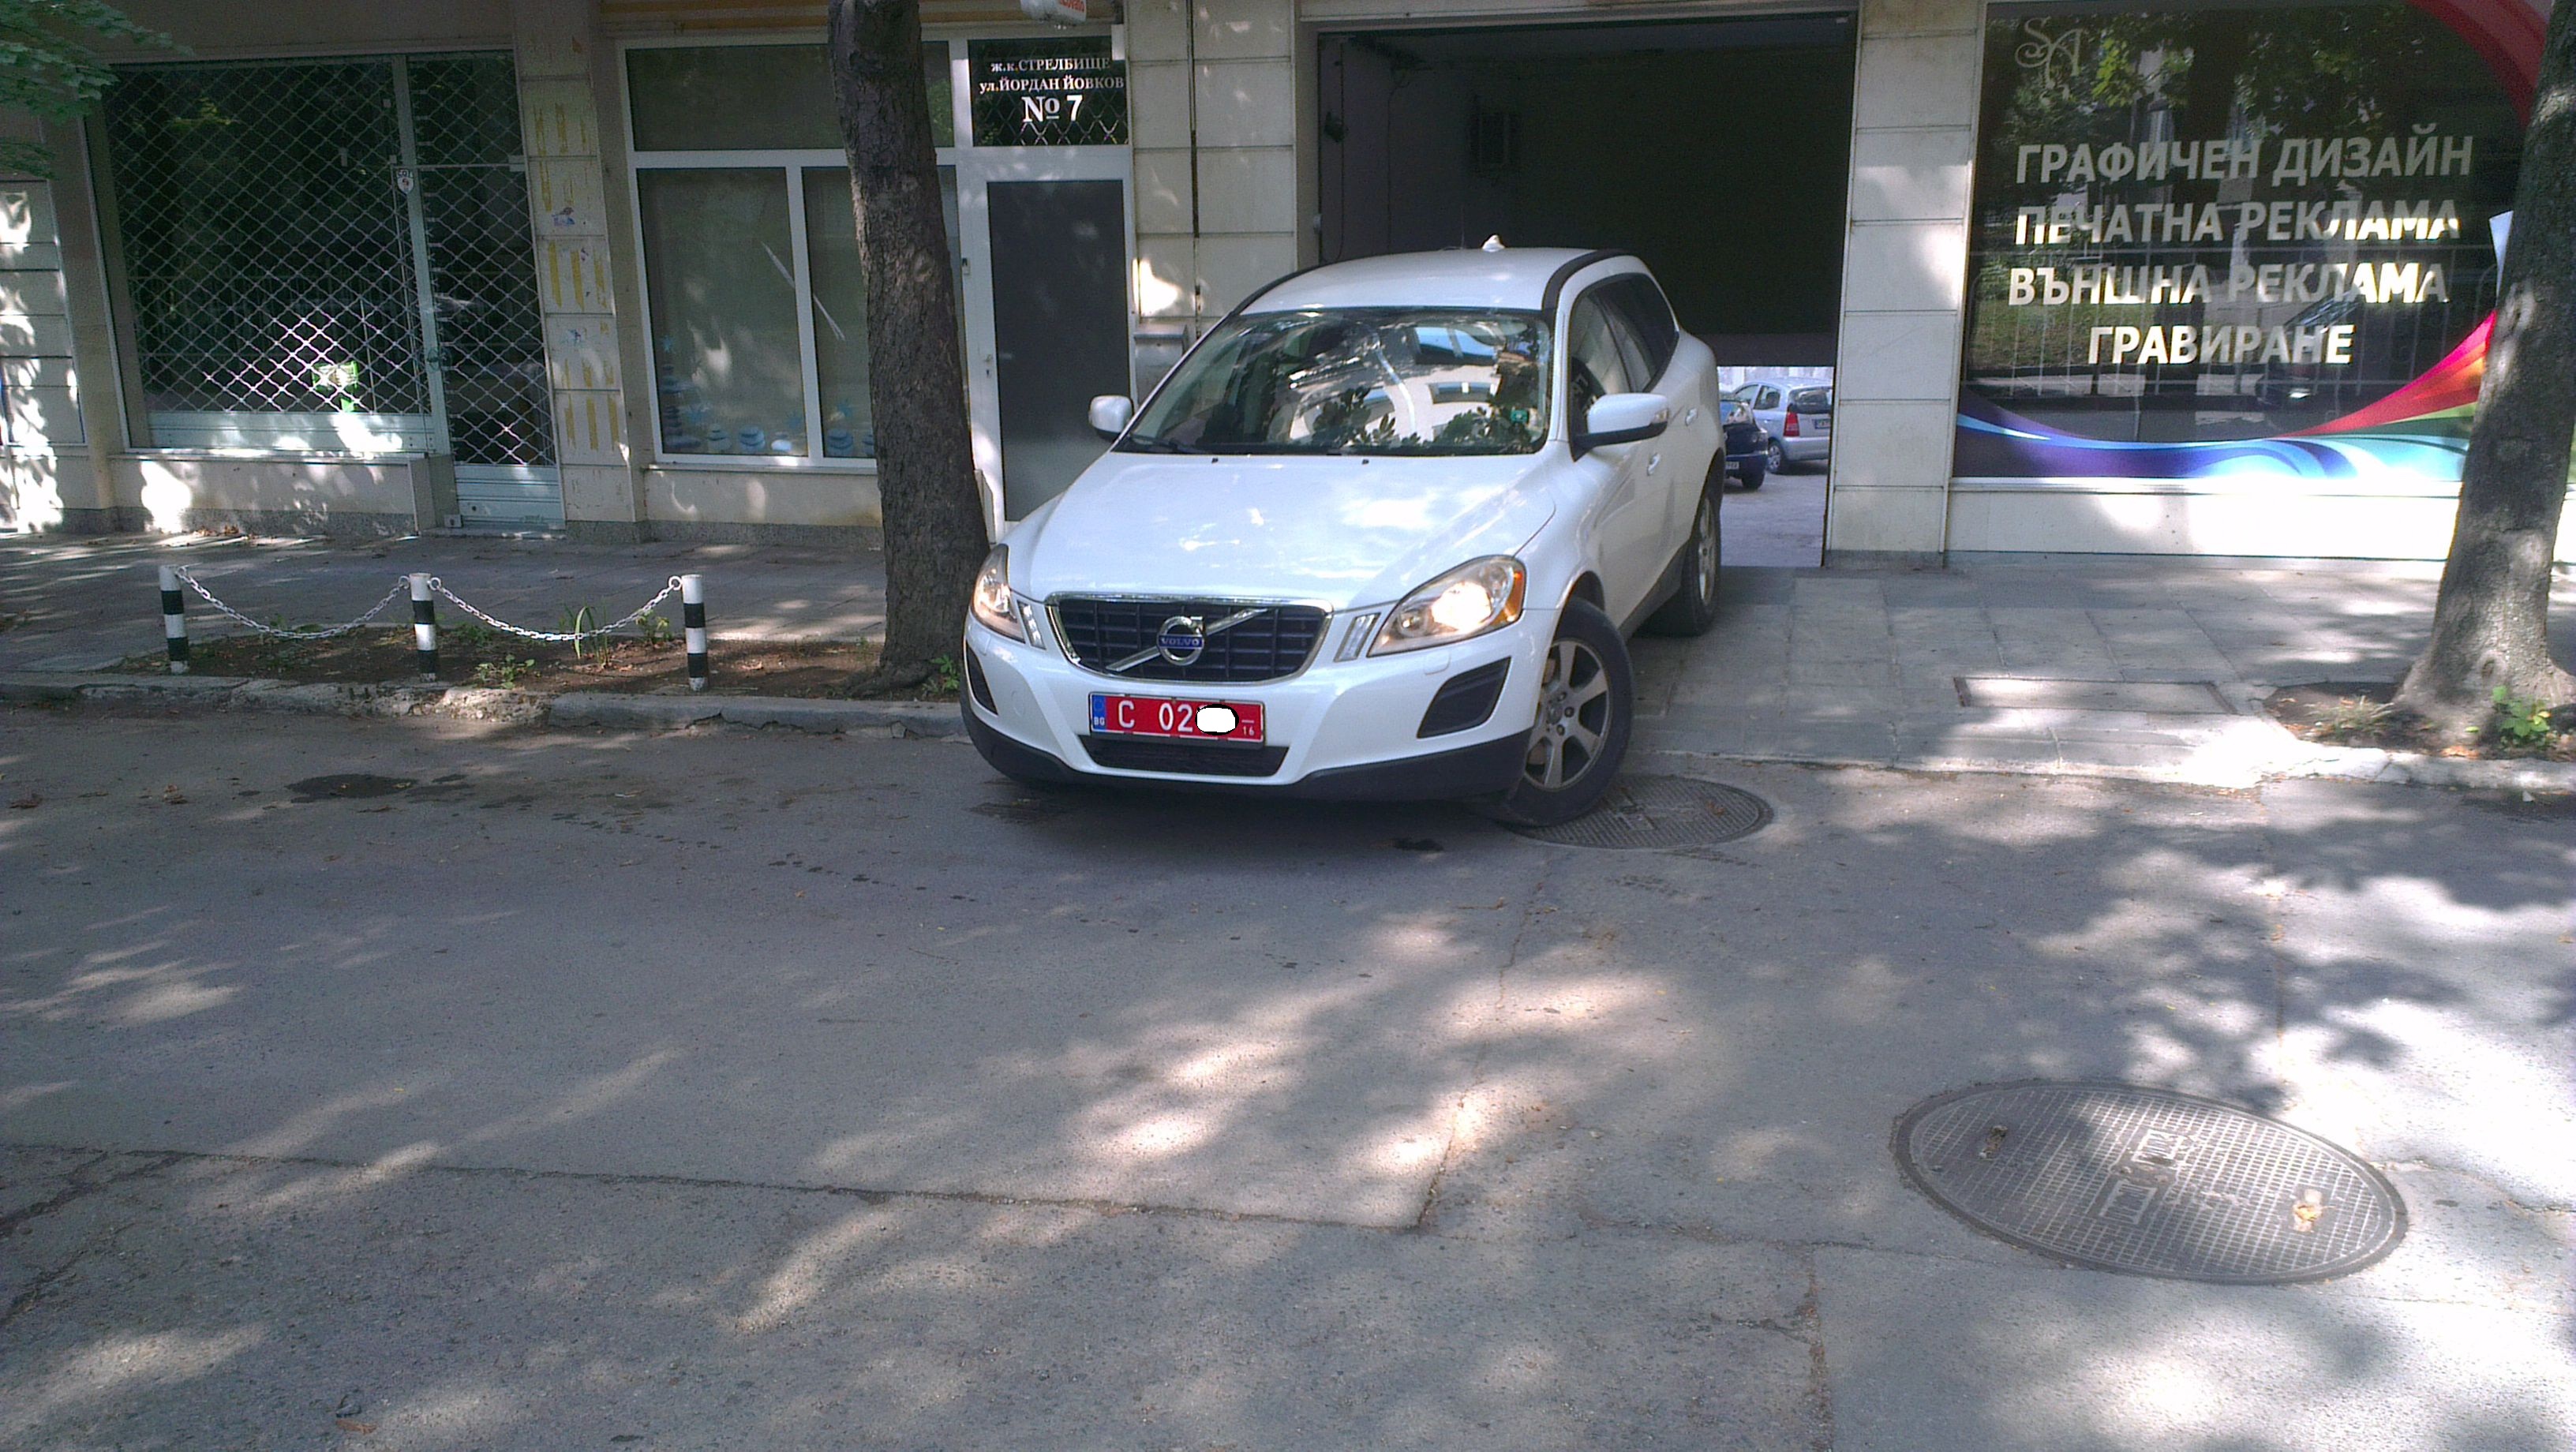 Дипломат паркира на тротоар в София